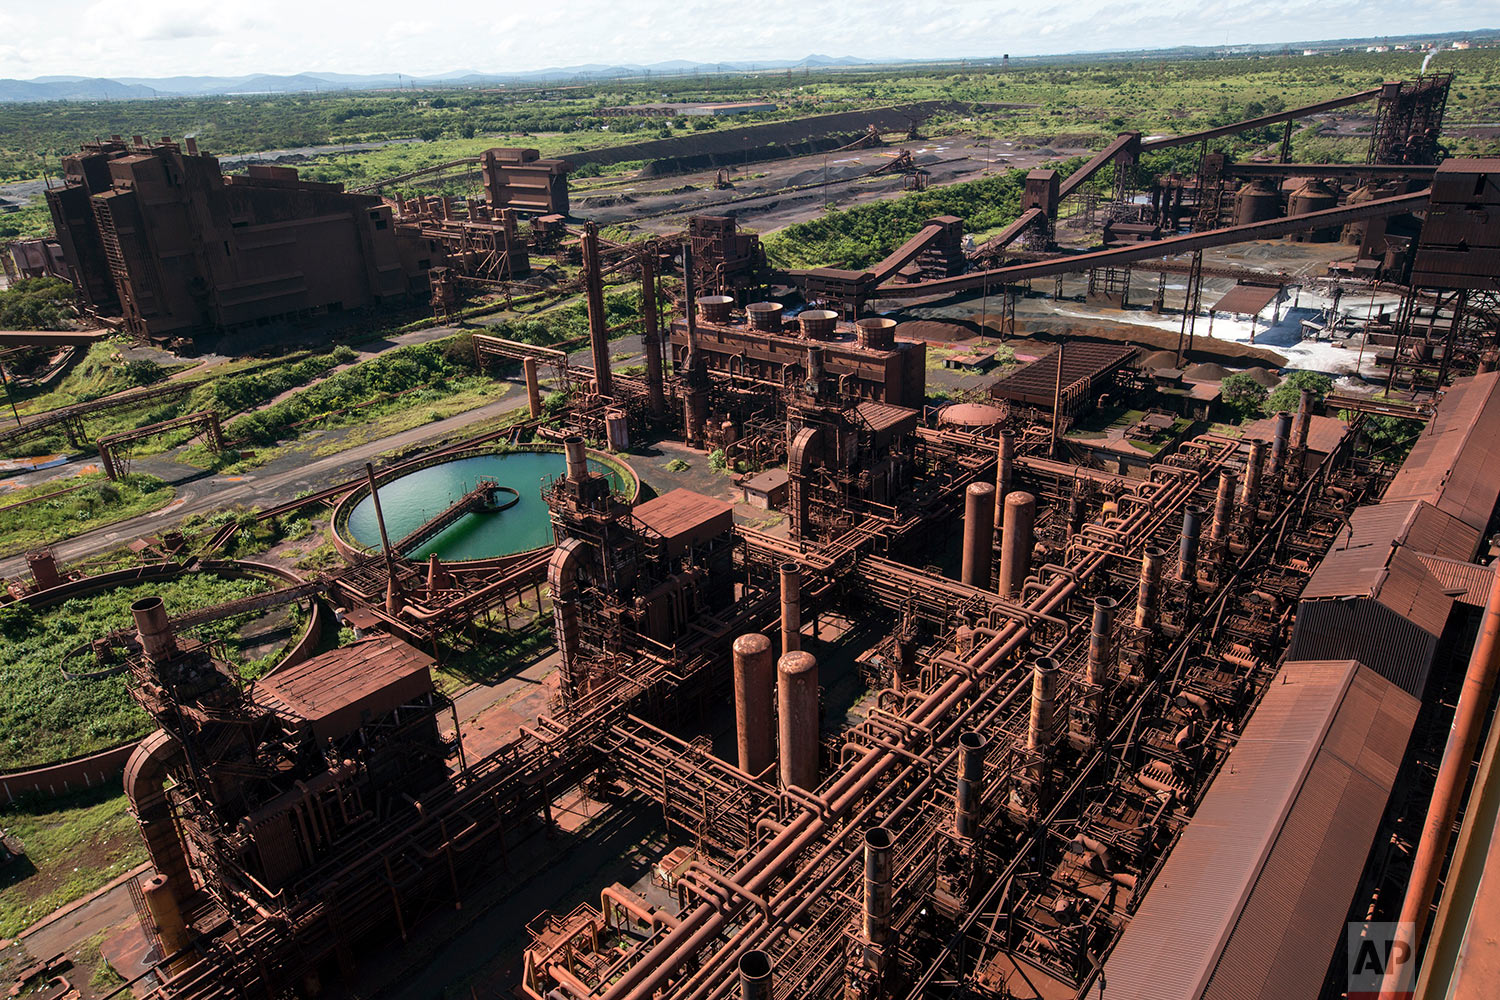 Aerial view of the Orinoco Iron briquette plant in Ciudad Guayana, Venezuela